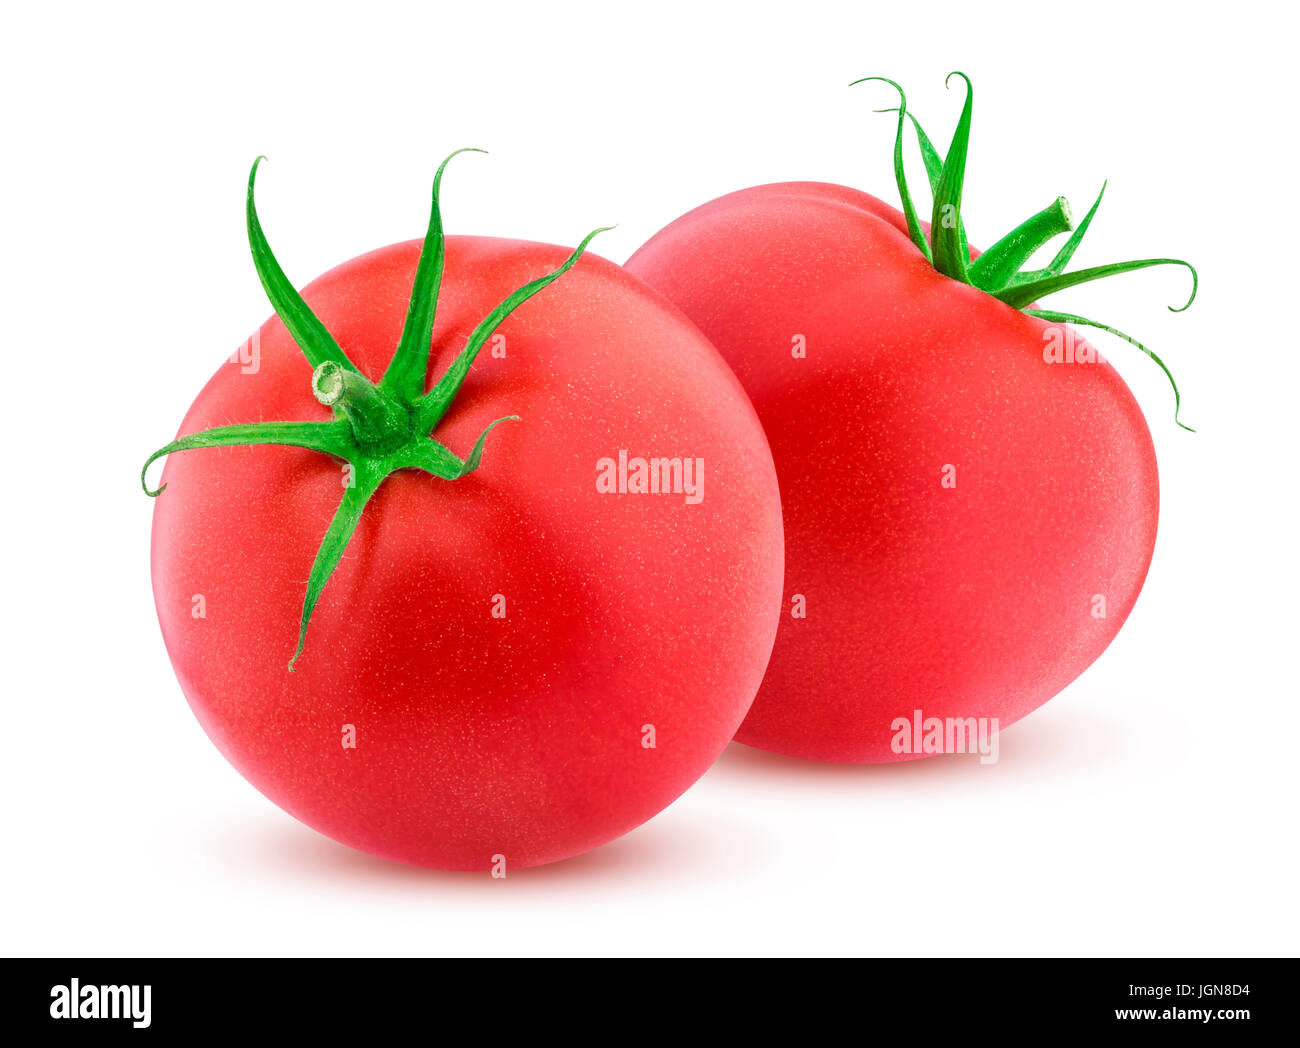 Two Whole tomatoes isolated on white background Stock Photo